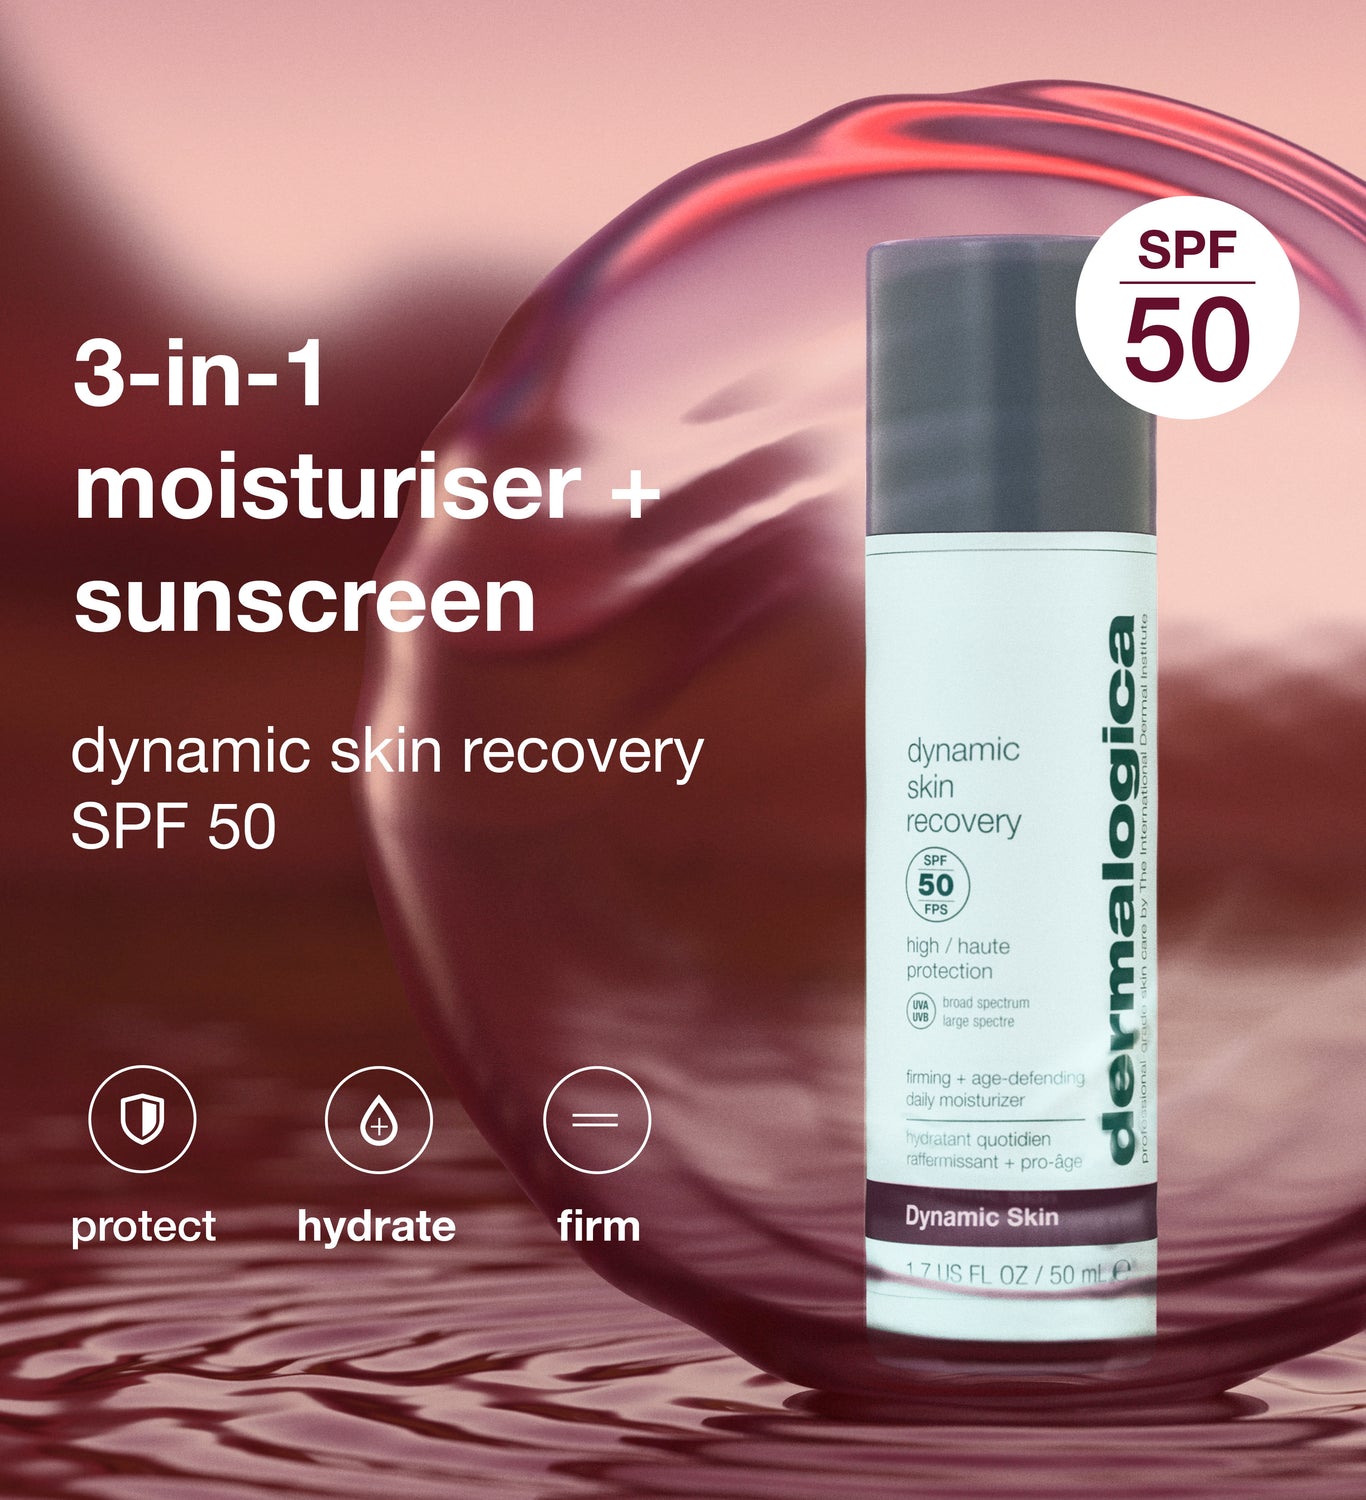 sunscreen/products/dynamic-skin-recovery-spf-50-face-moisturiser-sunscreen